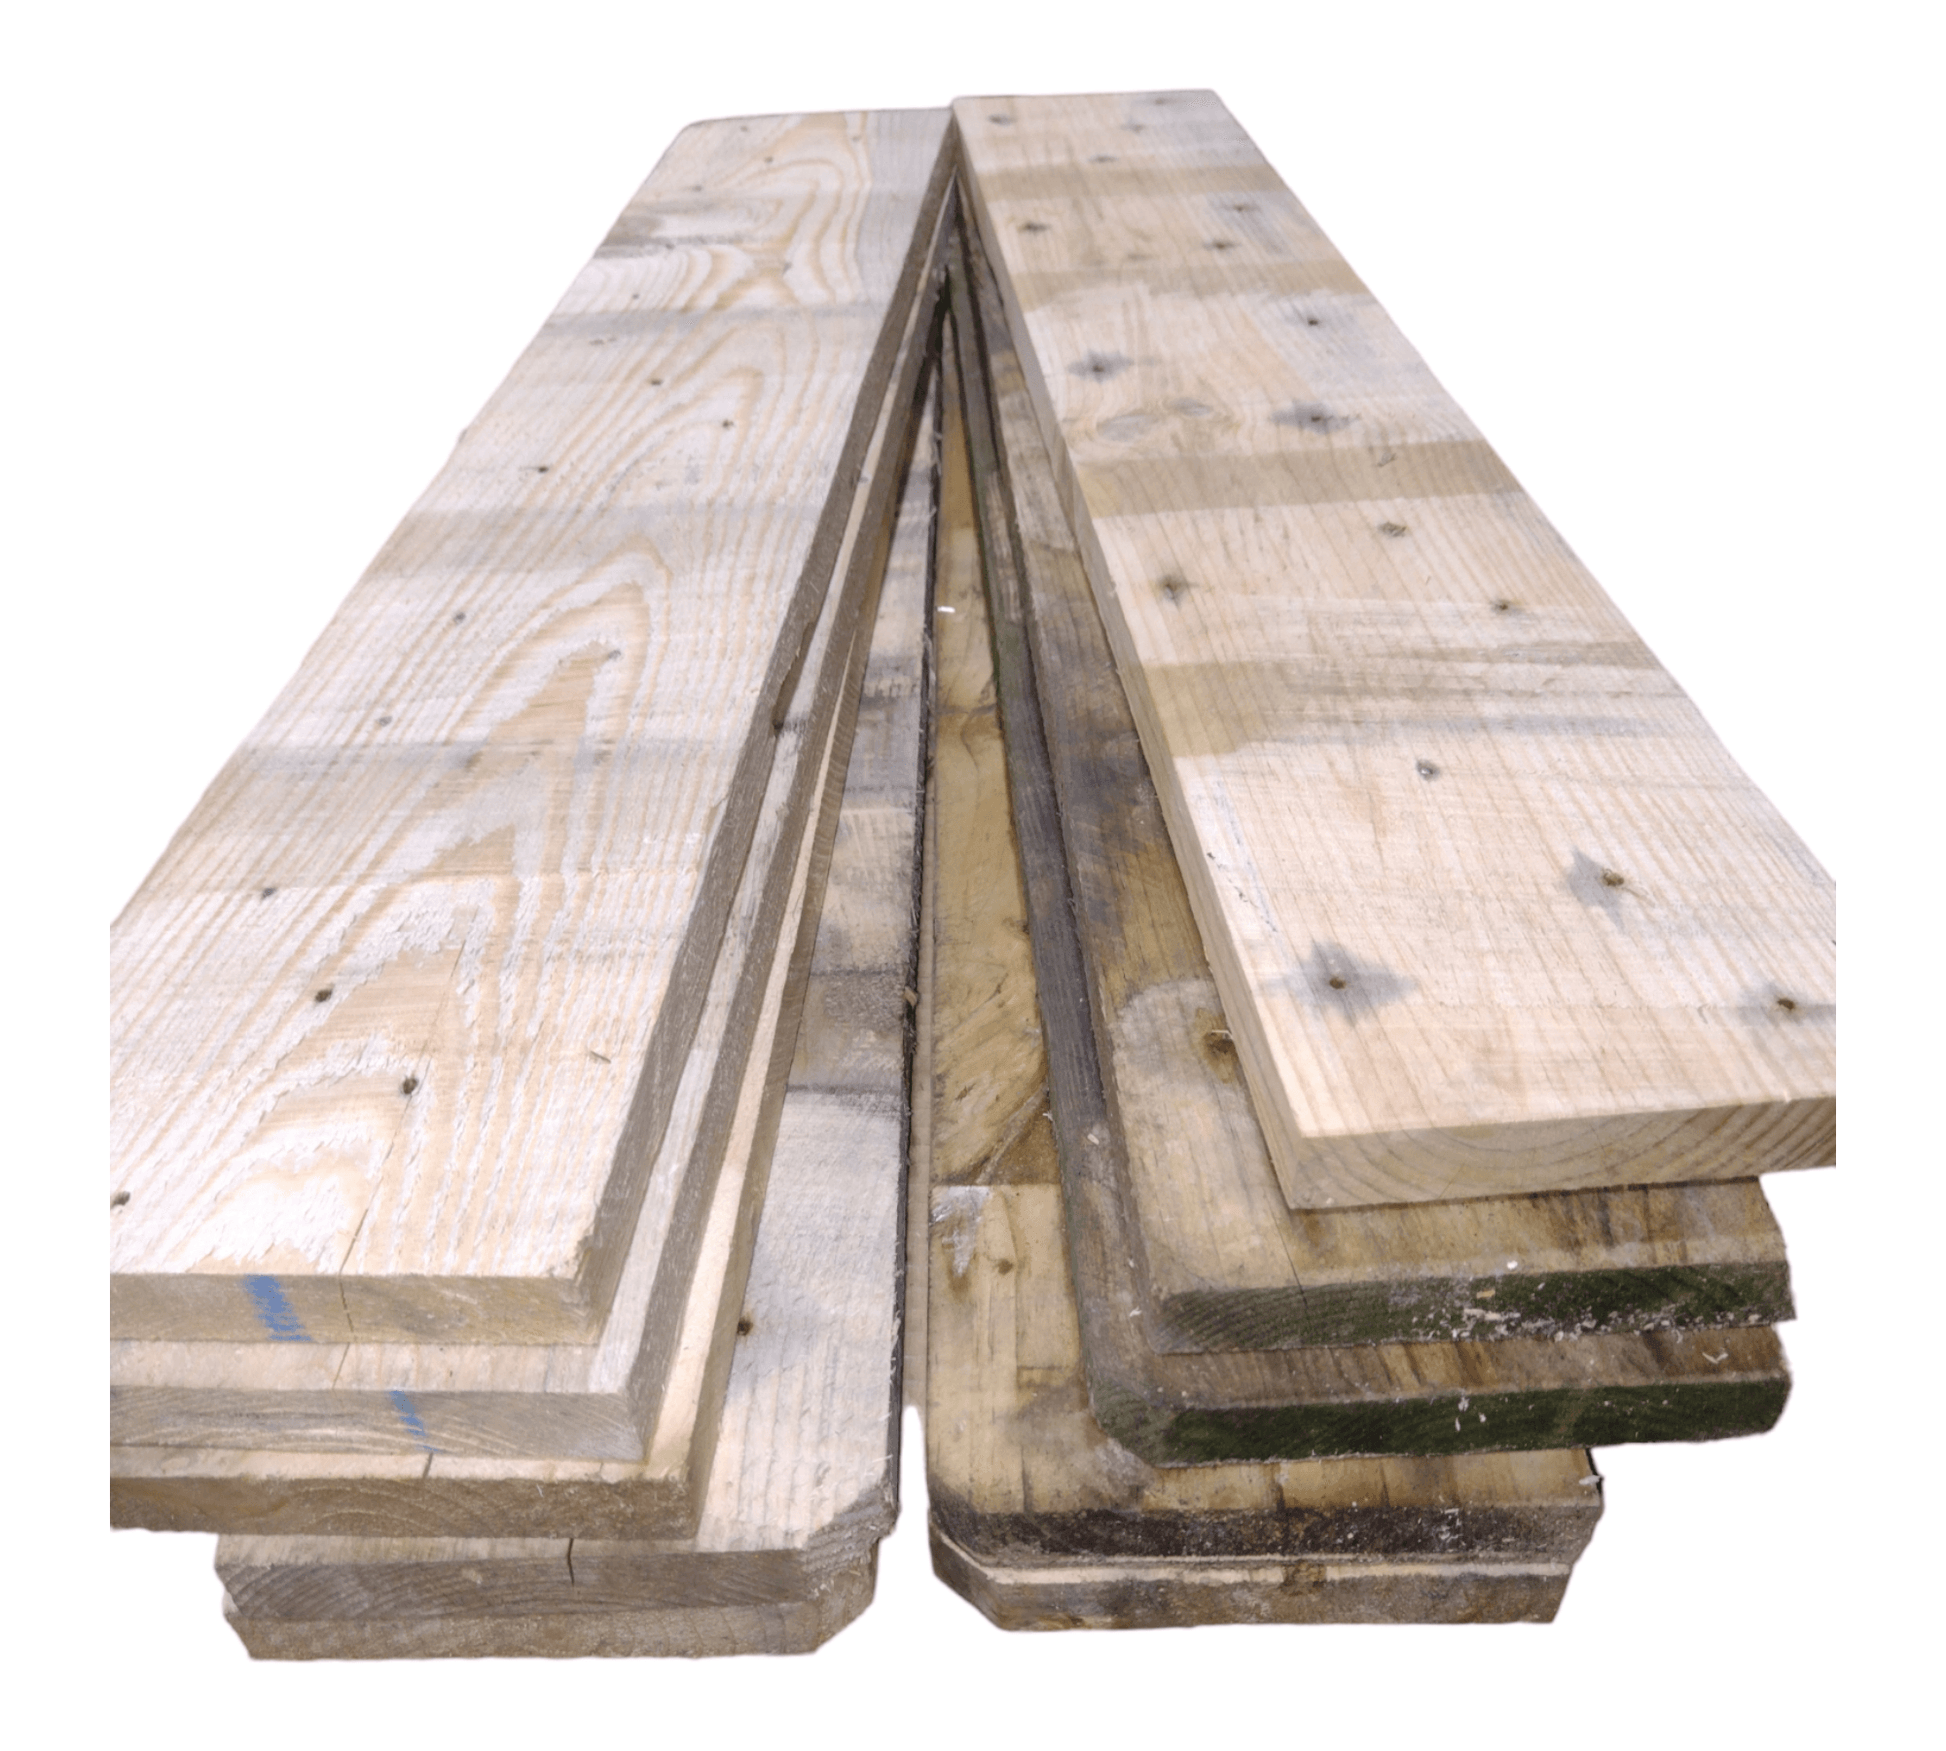 1sqm Reclaimed Pallet Wood Strong Planks - Anpio woods ltd